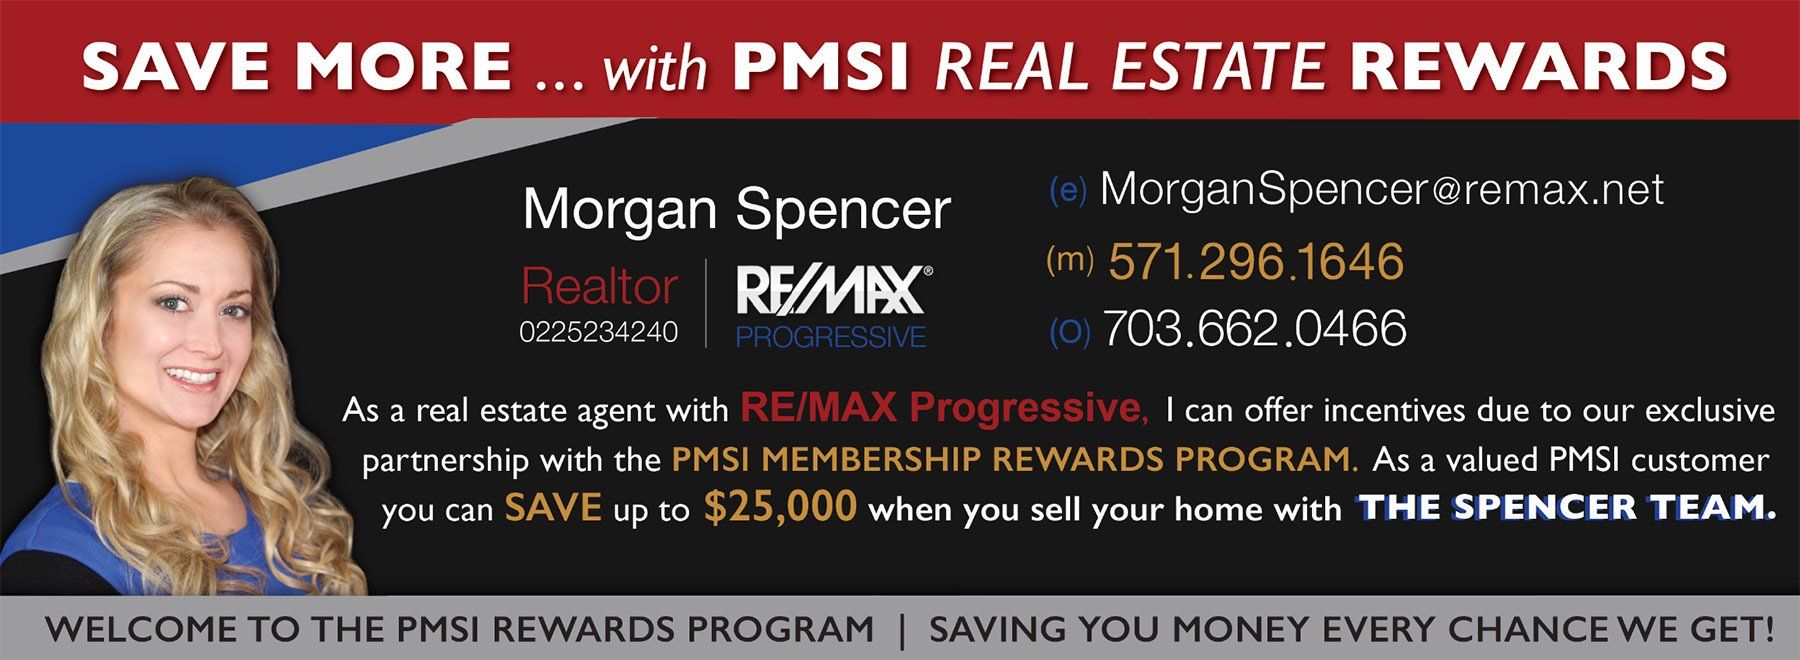 PMSI Real Estate REWARDS